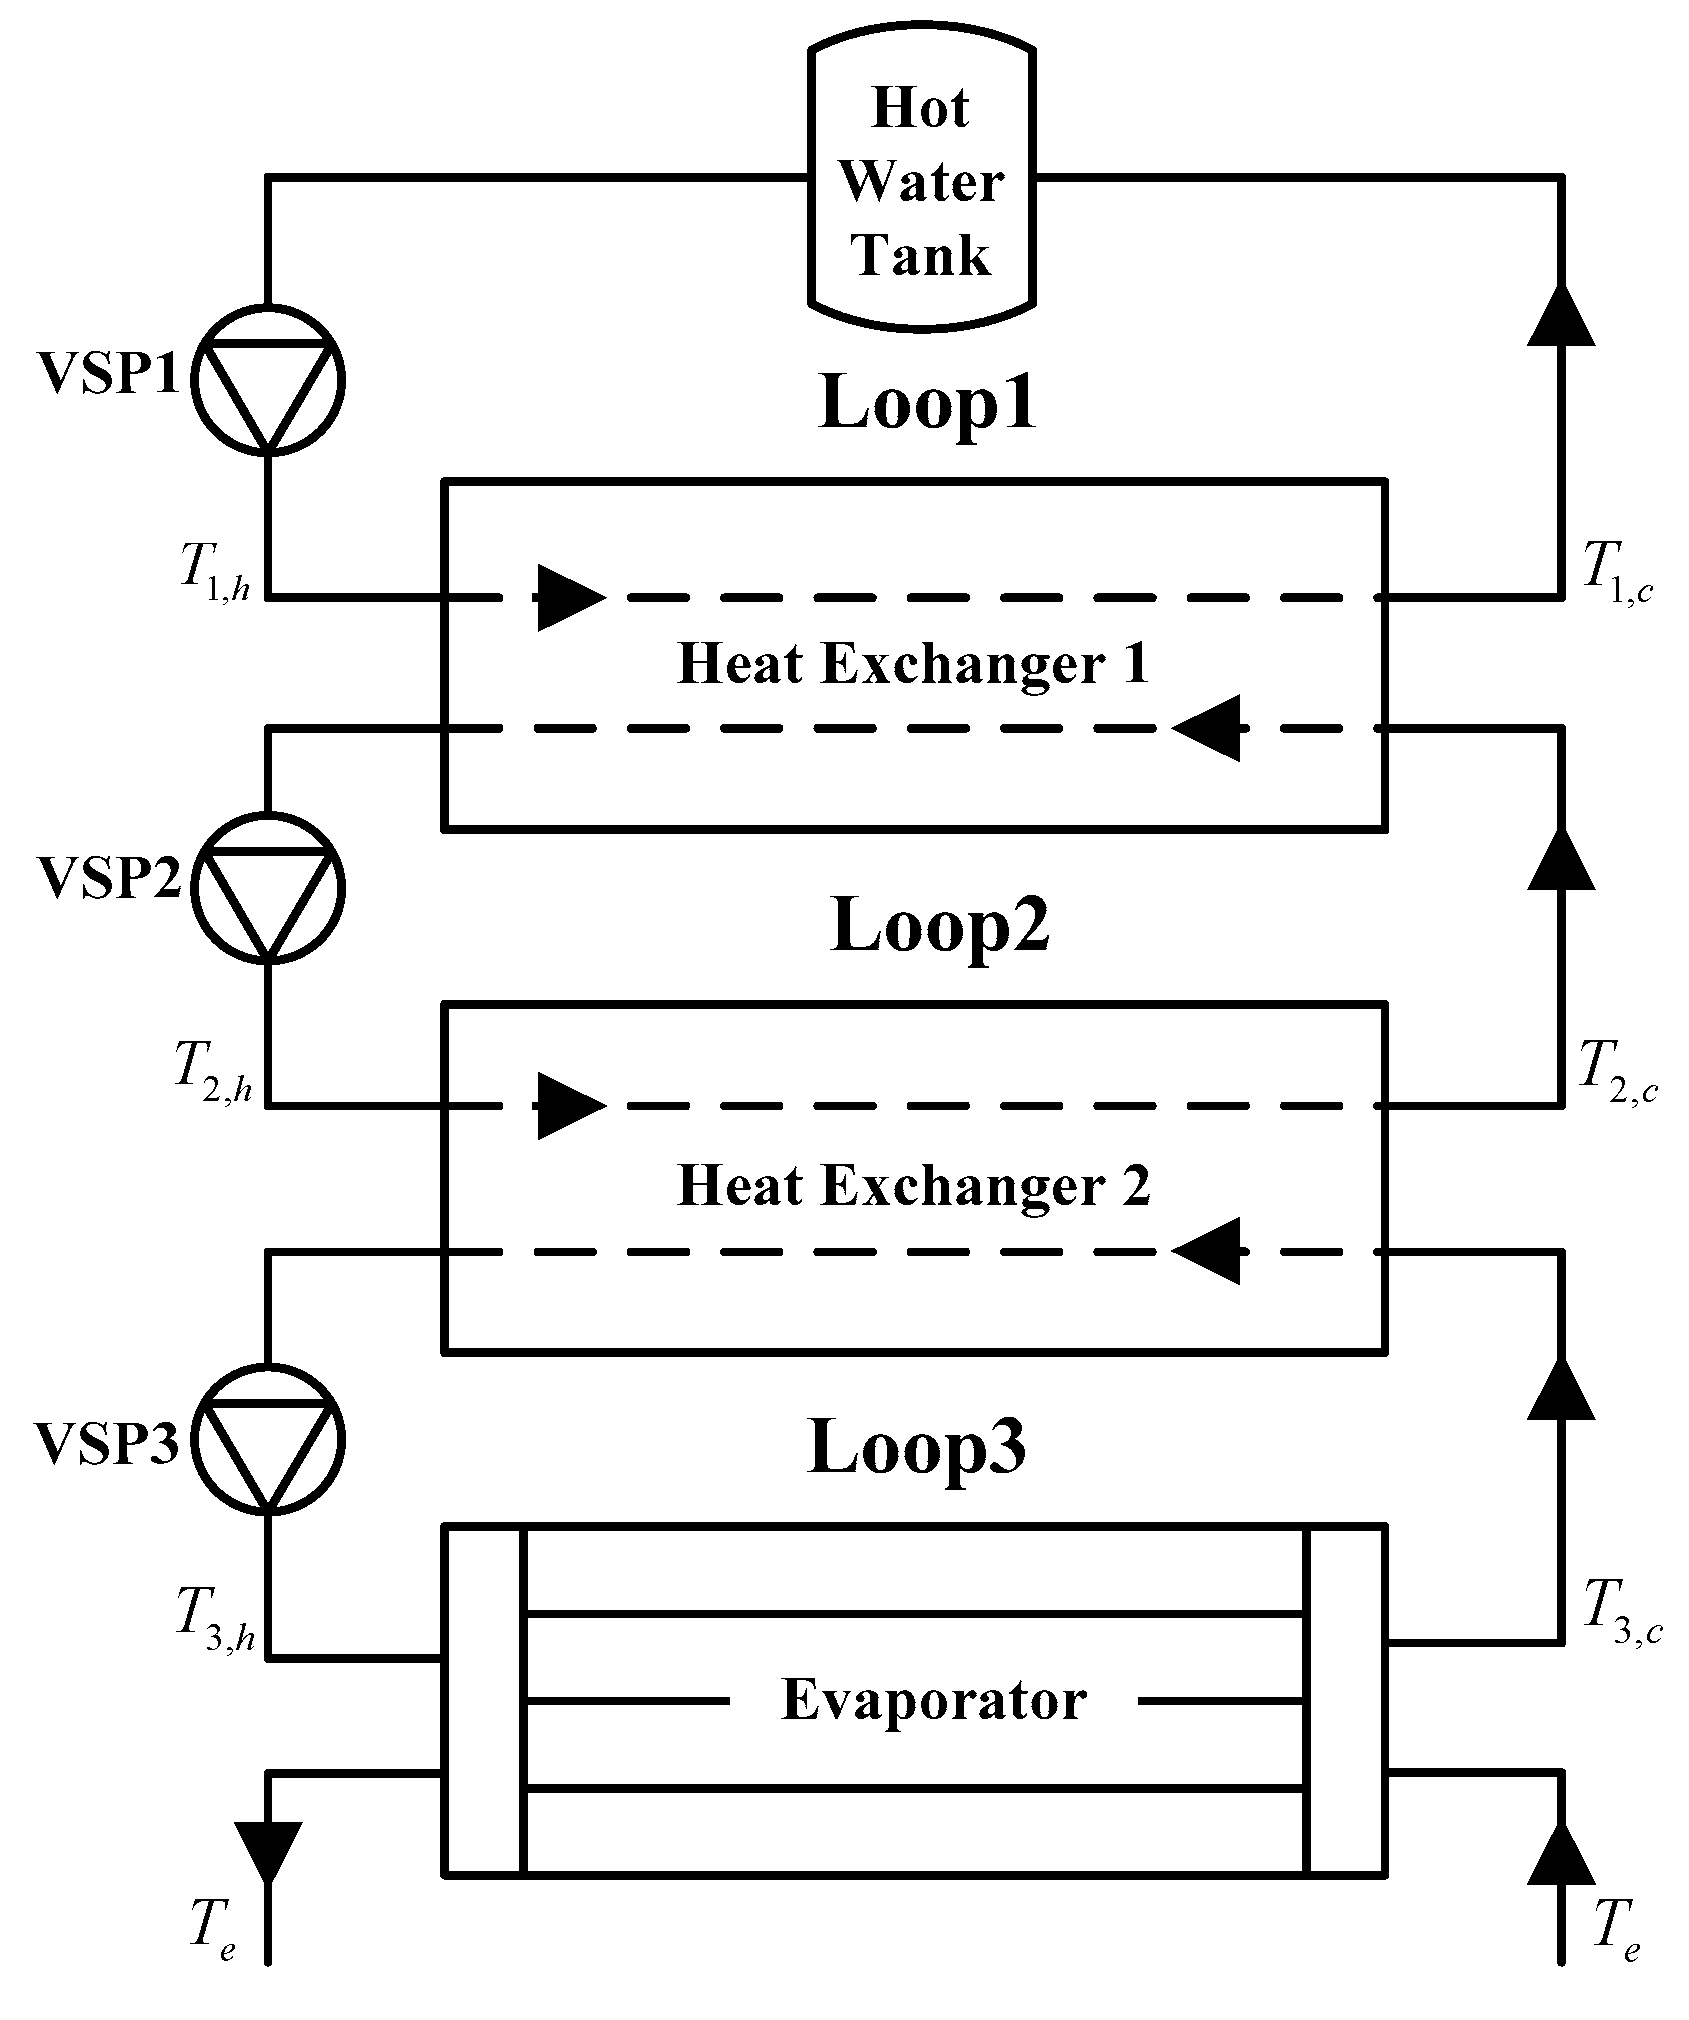 Diagram of heat transfer process.